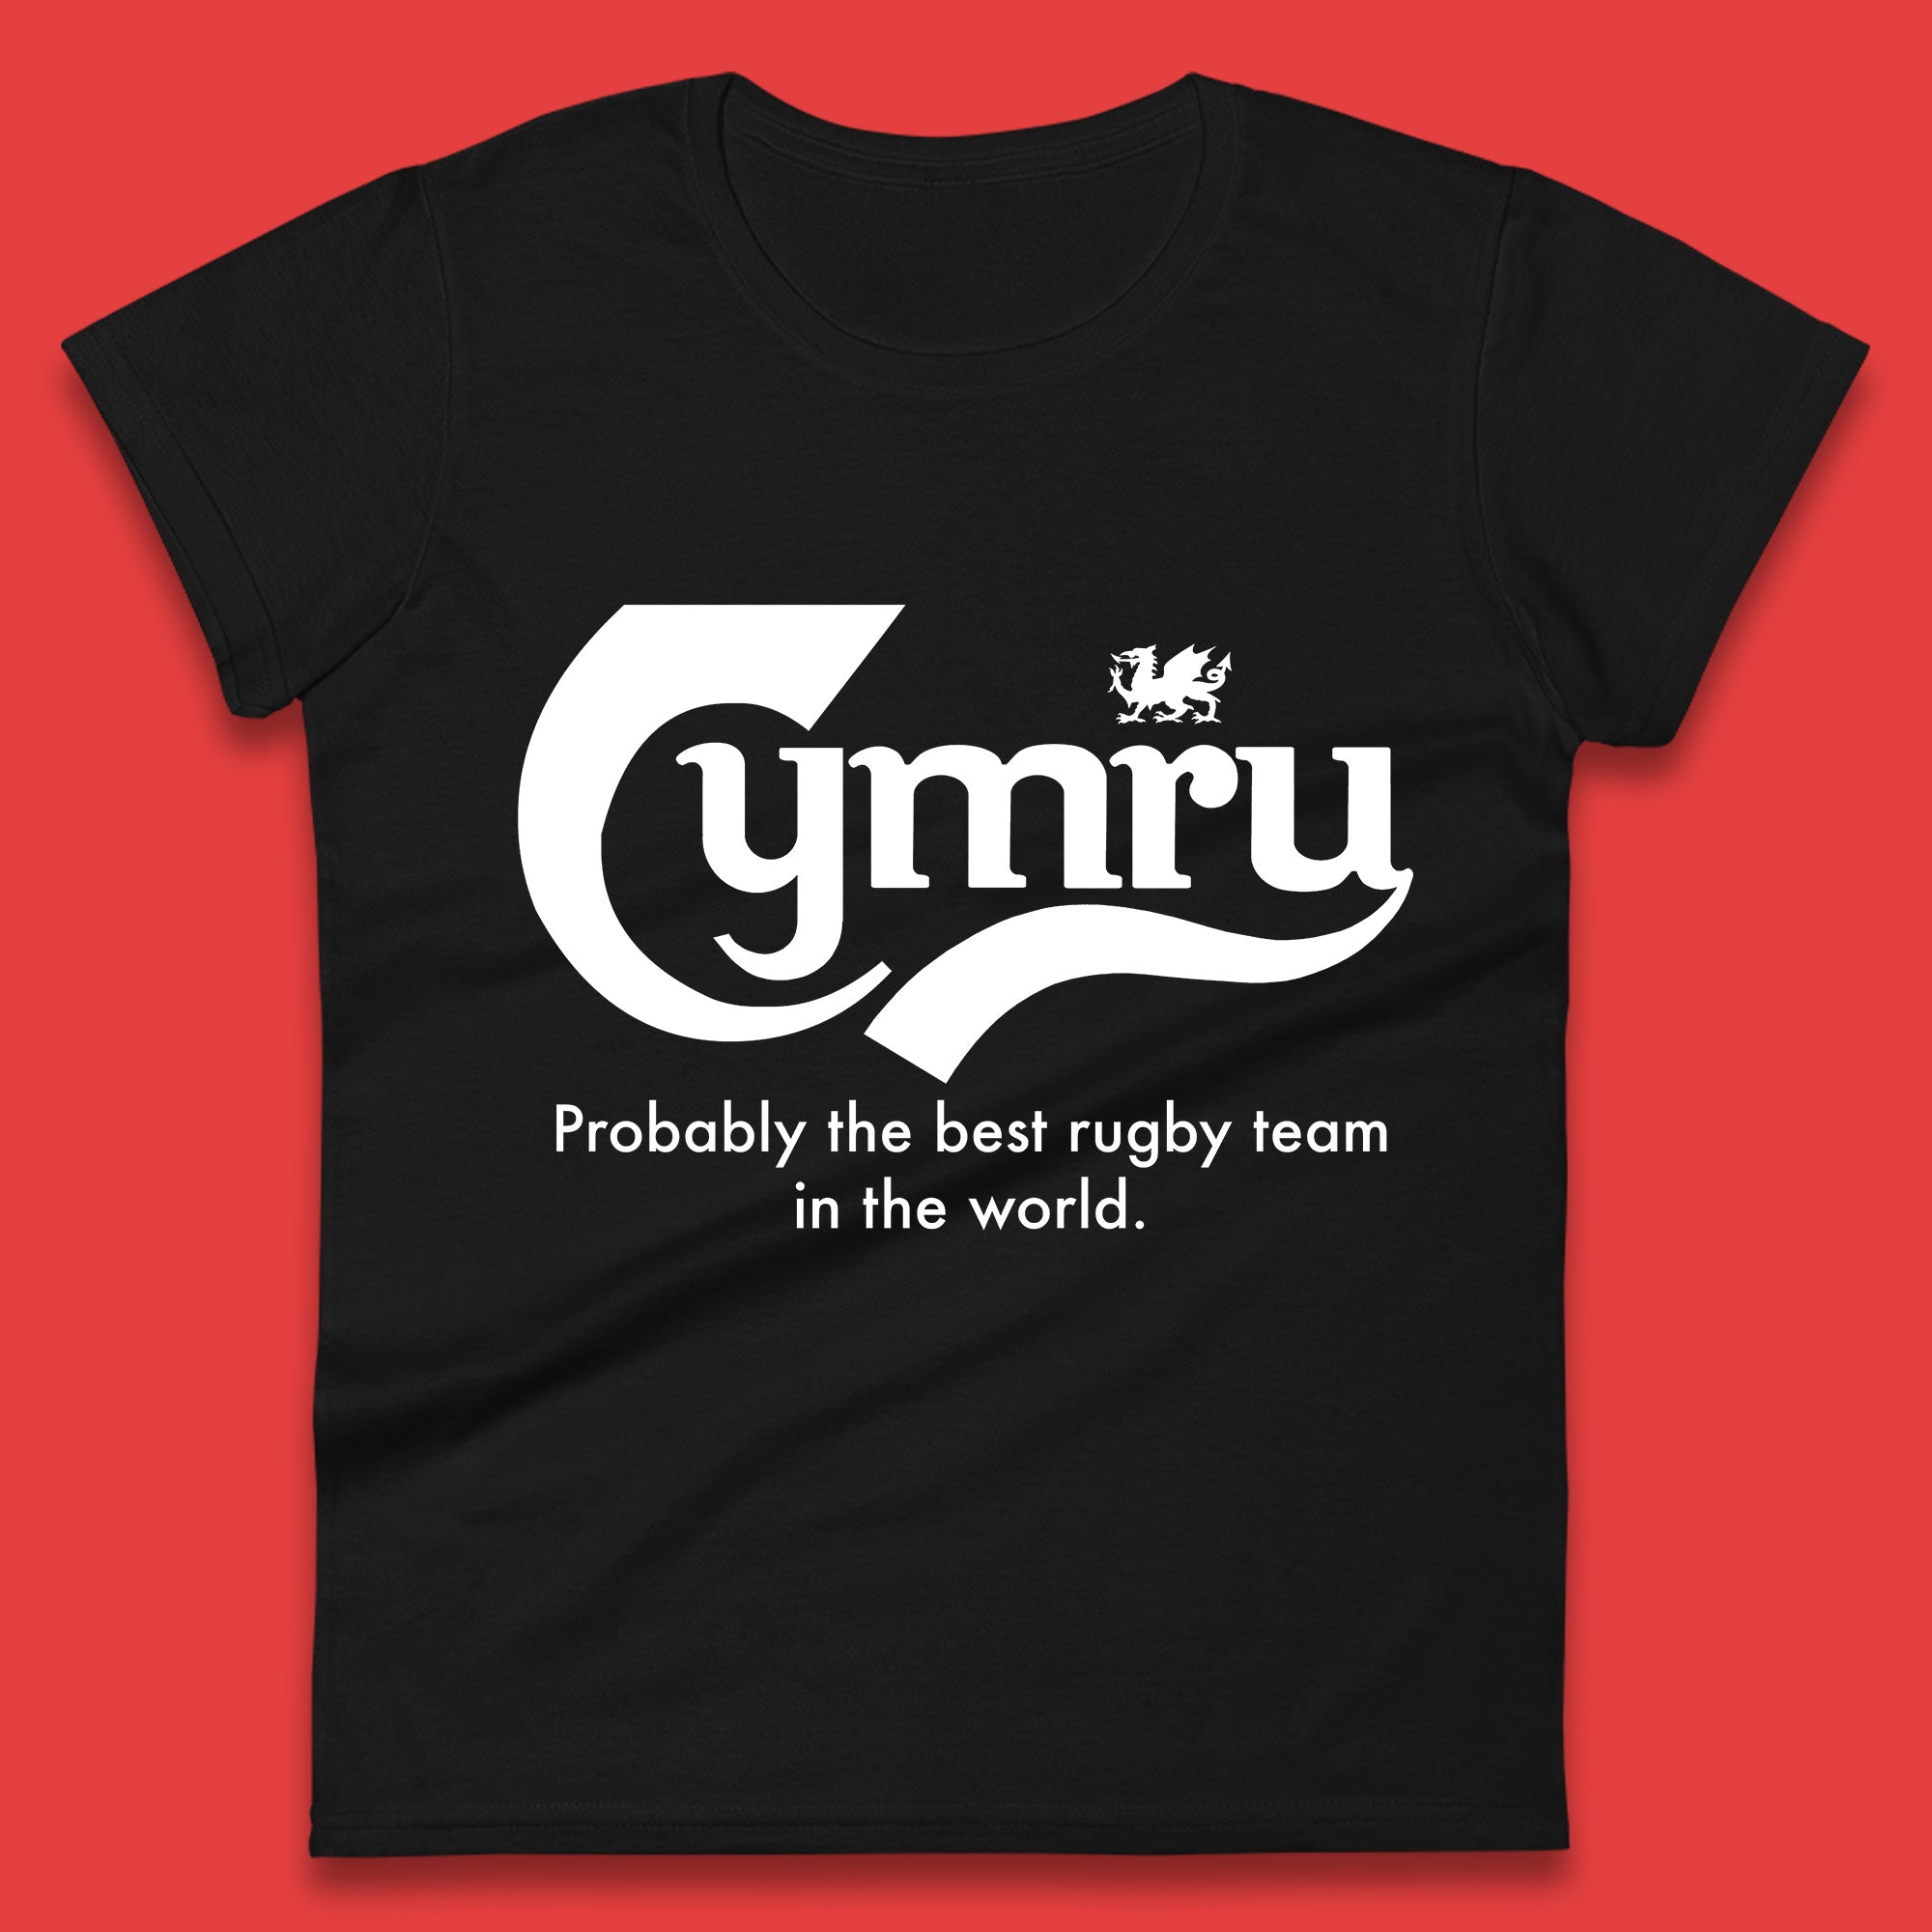 Ladies Wales Rugby Shirt